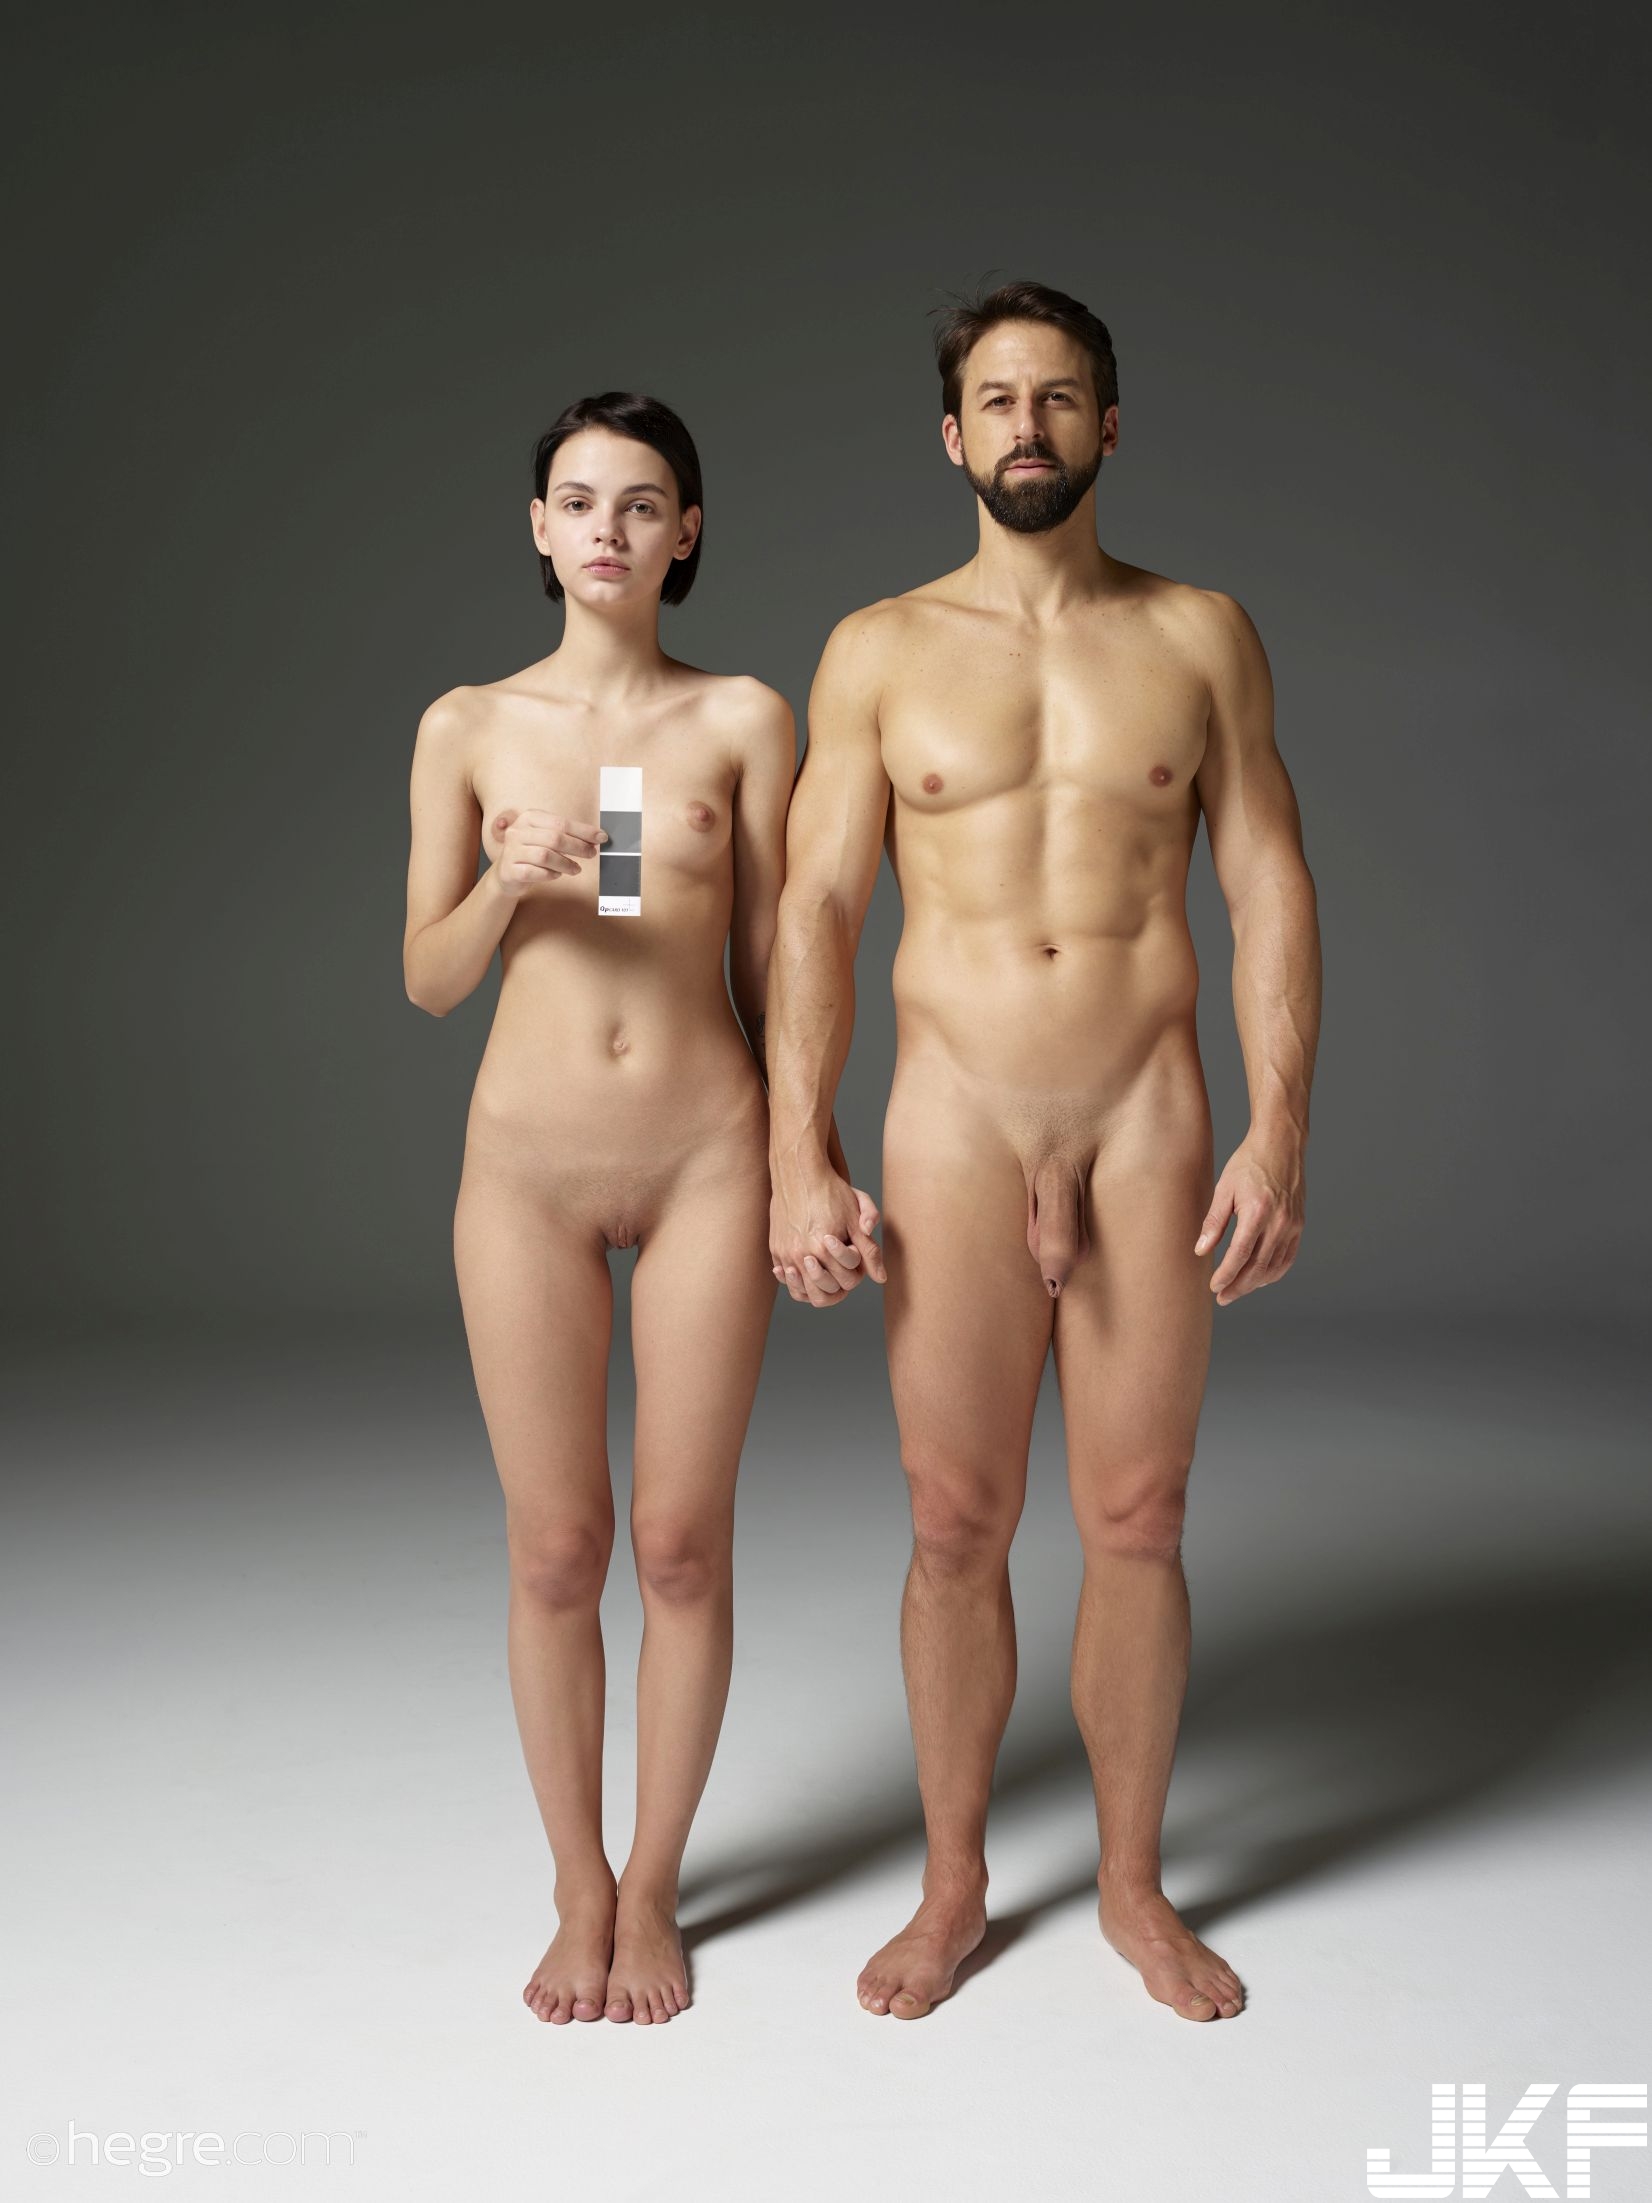 мужчина и женщина позируют голыми фото 26